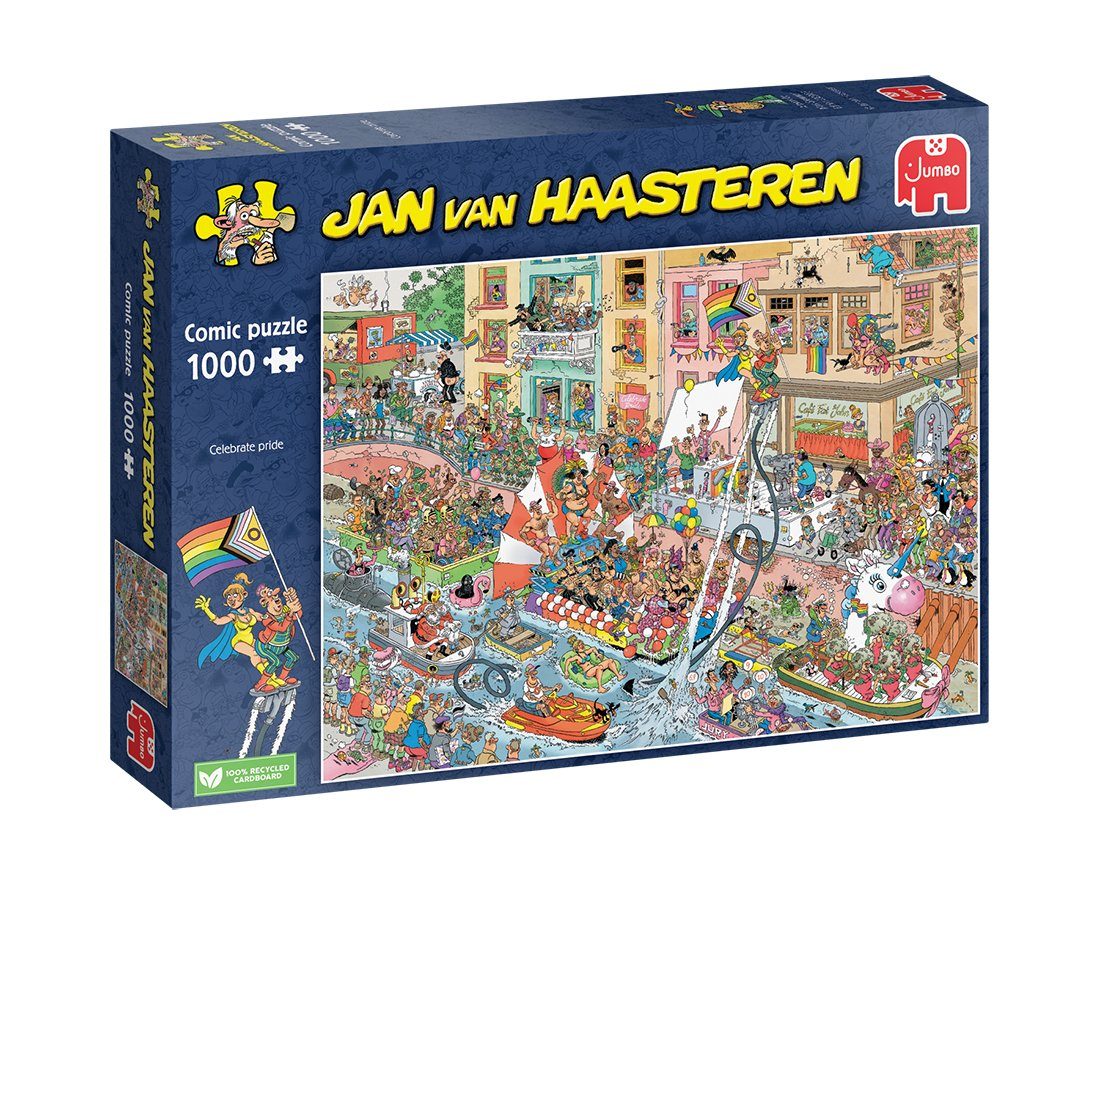 Jumbo Spiele Puzzle Jumbo Spiele 1110100030 Celebrate Pride Puzzle, 1000 Puzzleteile